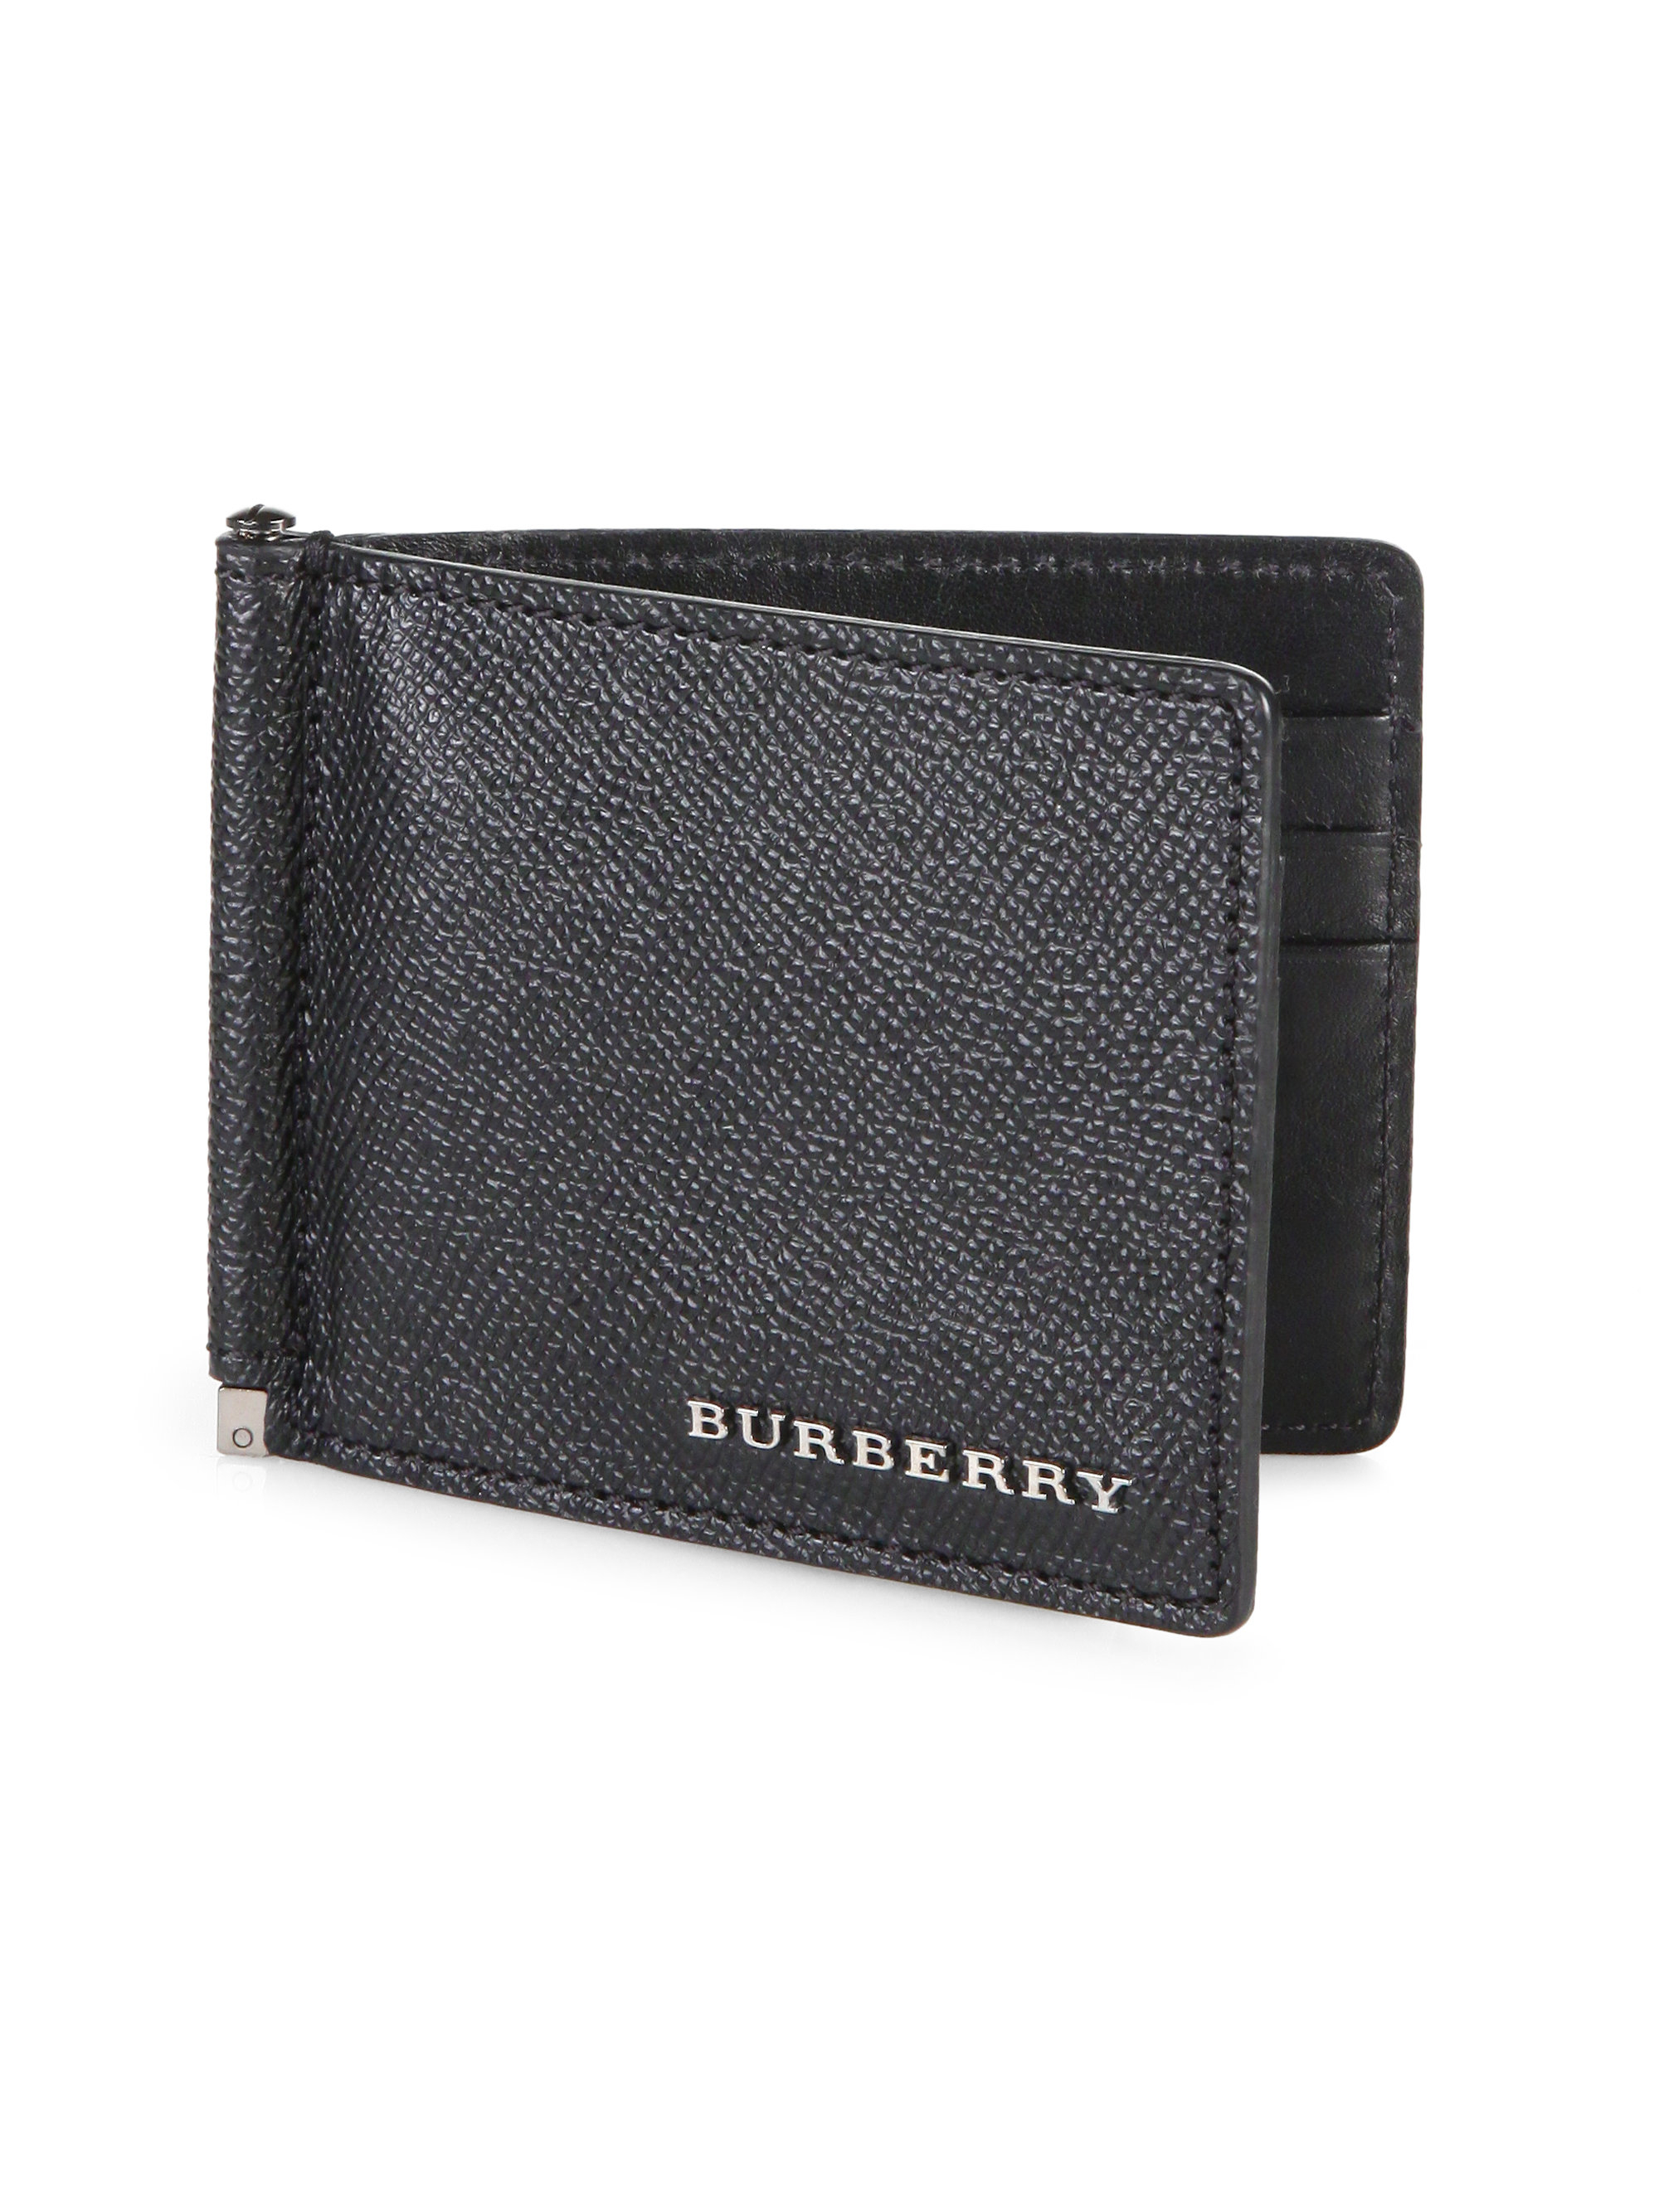 Lyst - Burberry Leather Quillen Clip Wallet in Black for Men